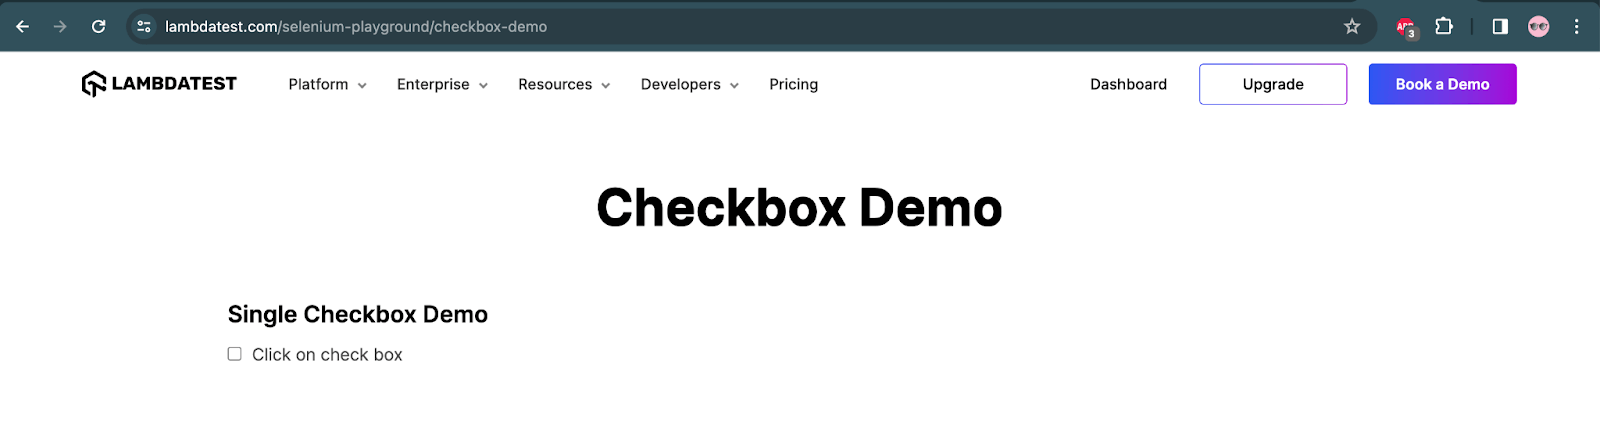 Single Checkbox Demo